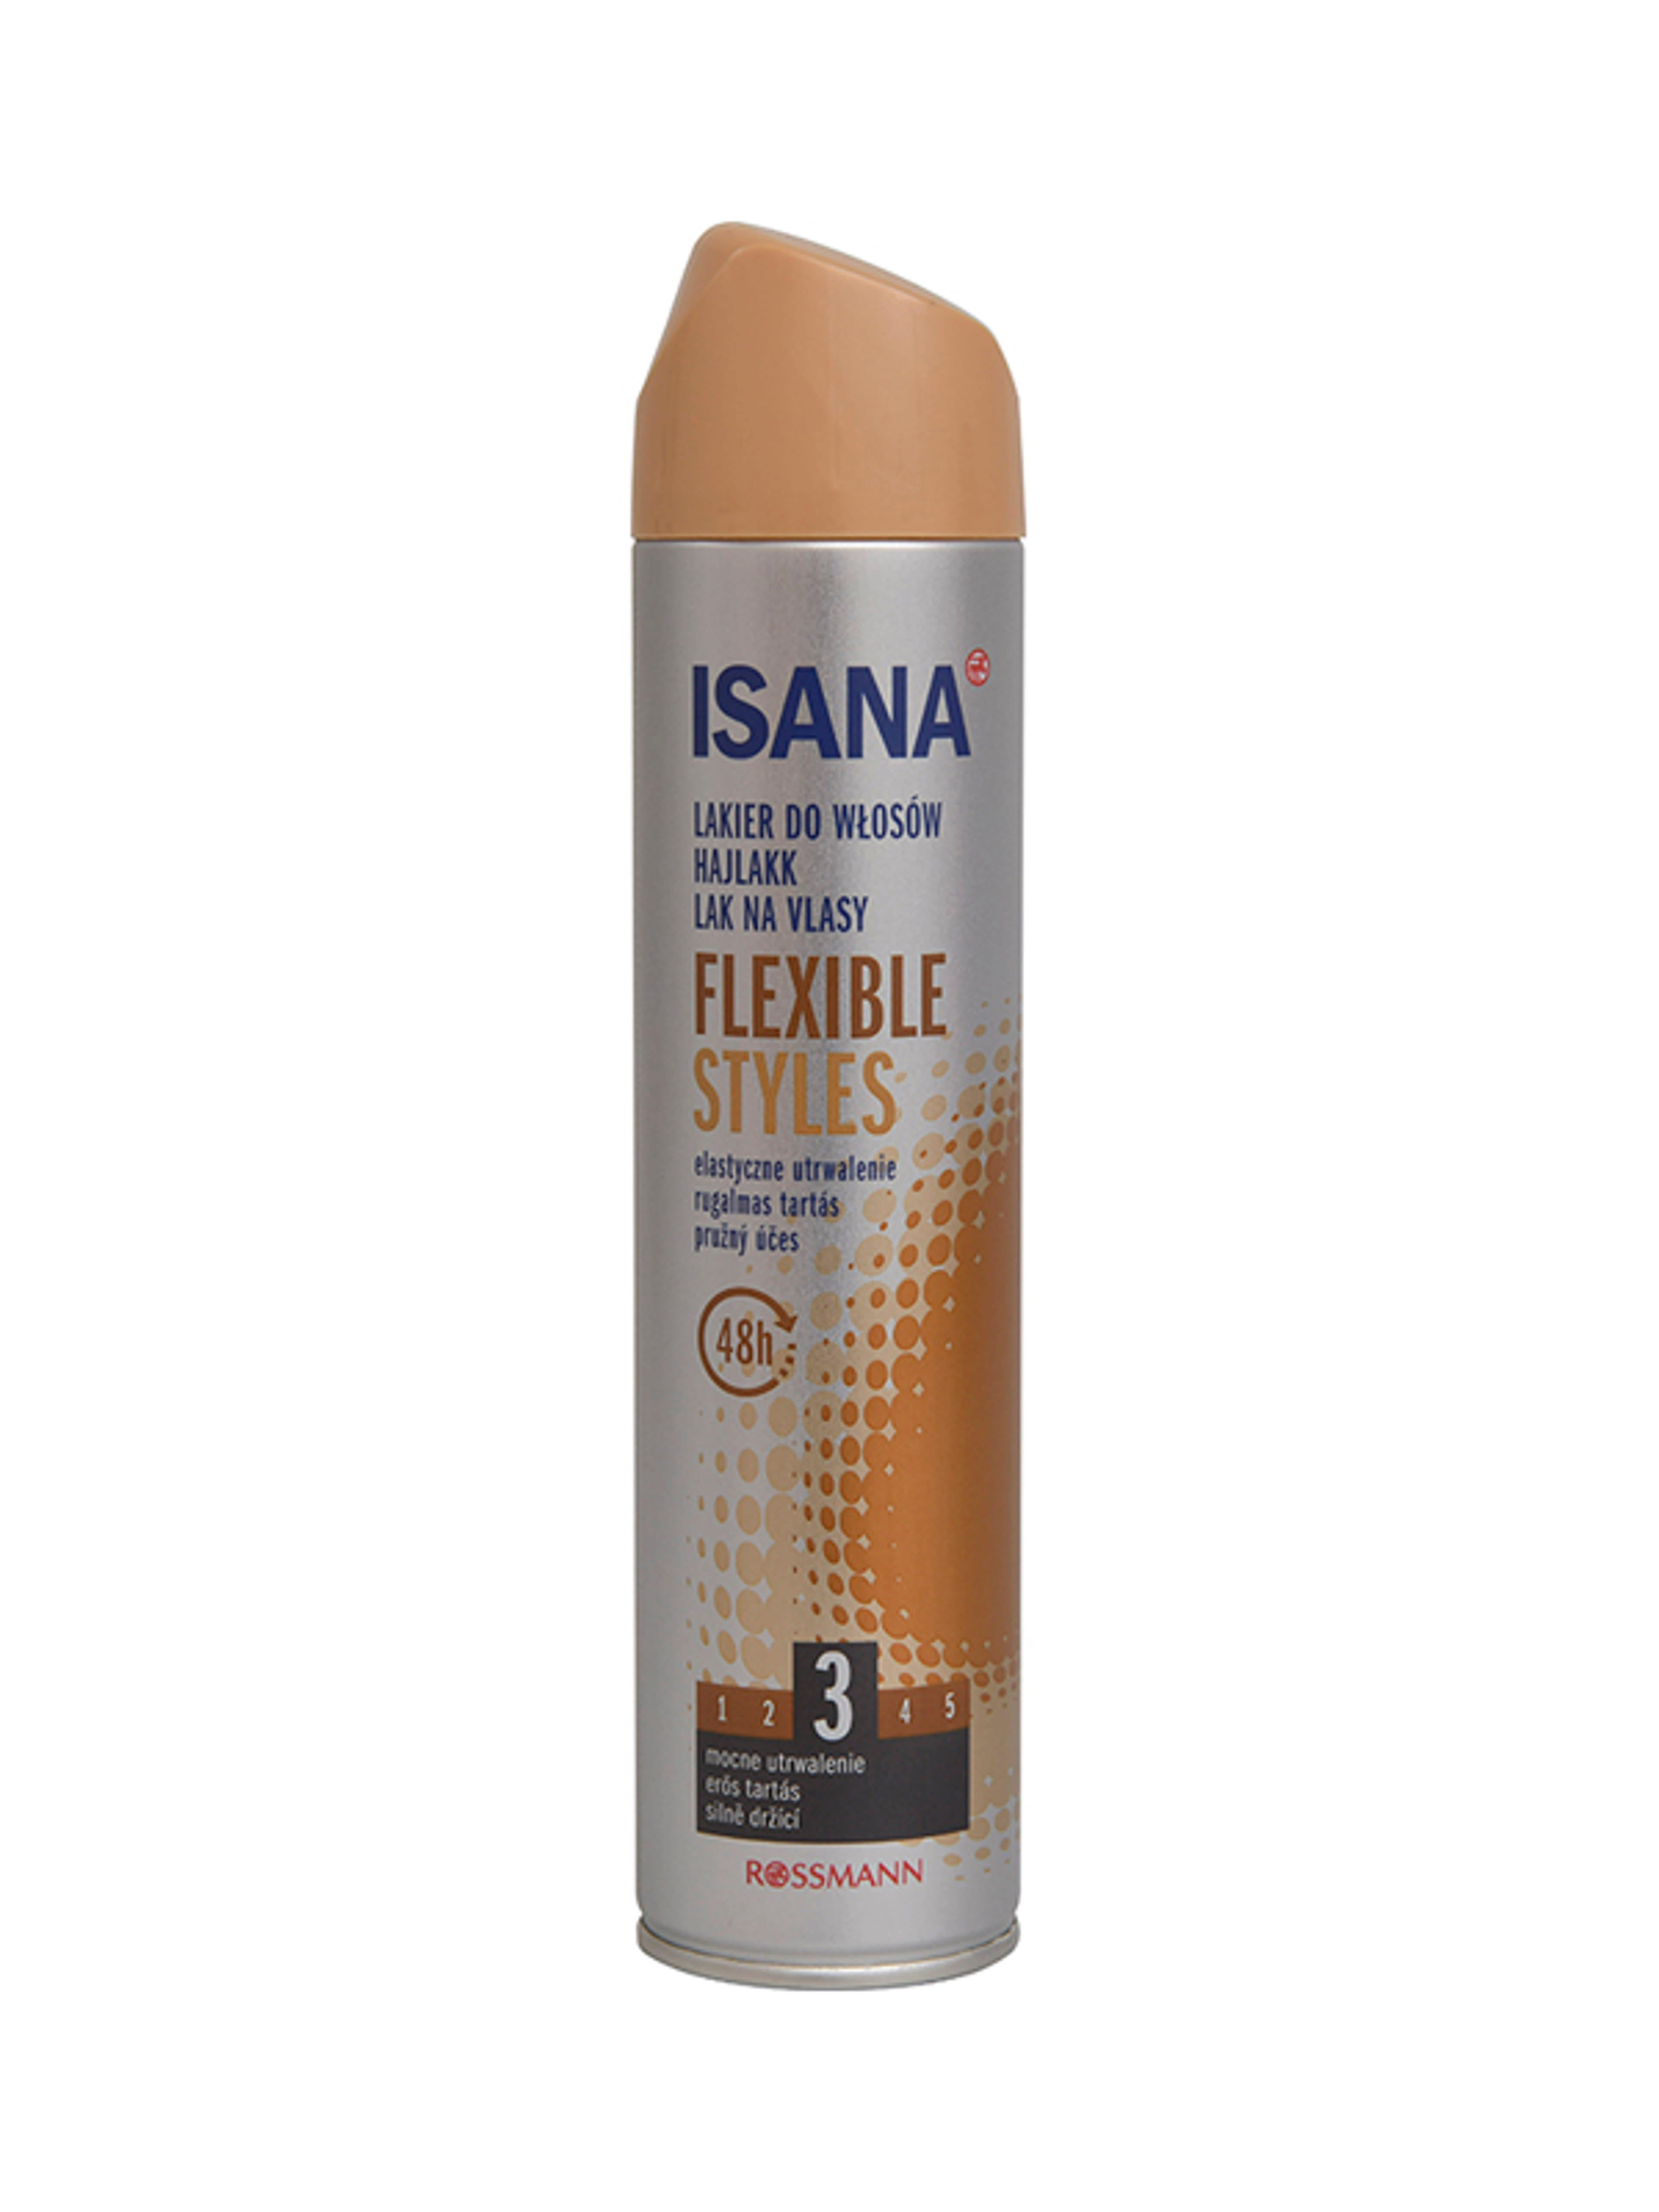 Isana Hair Flexible hajlakk - 250 ml